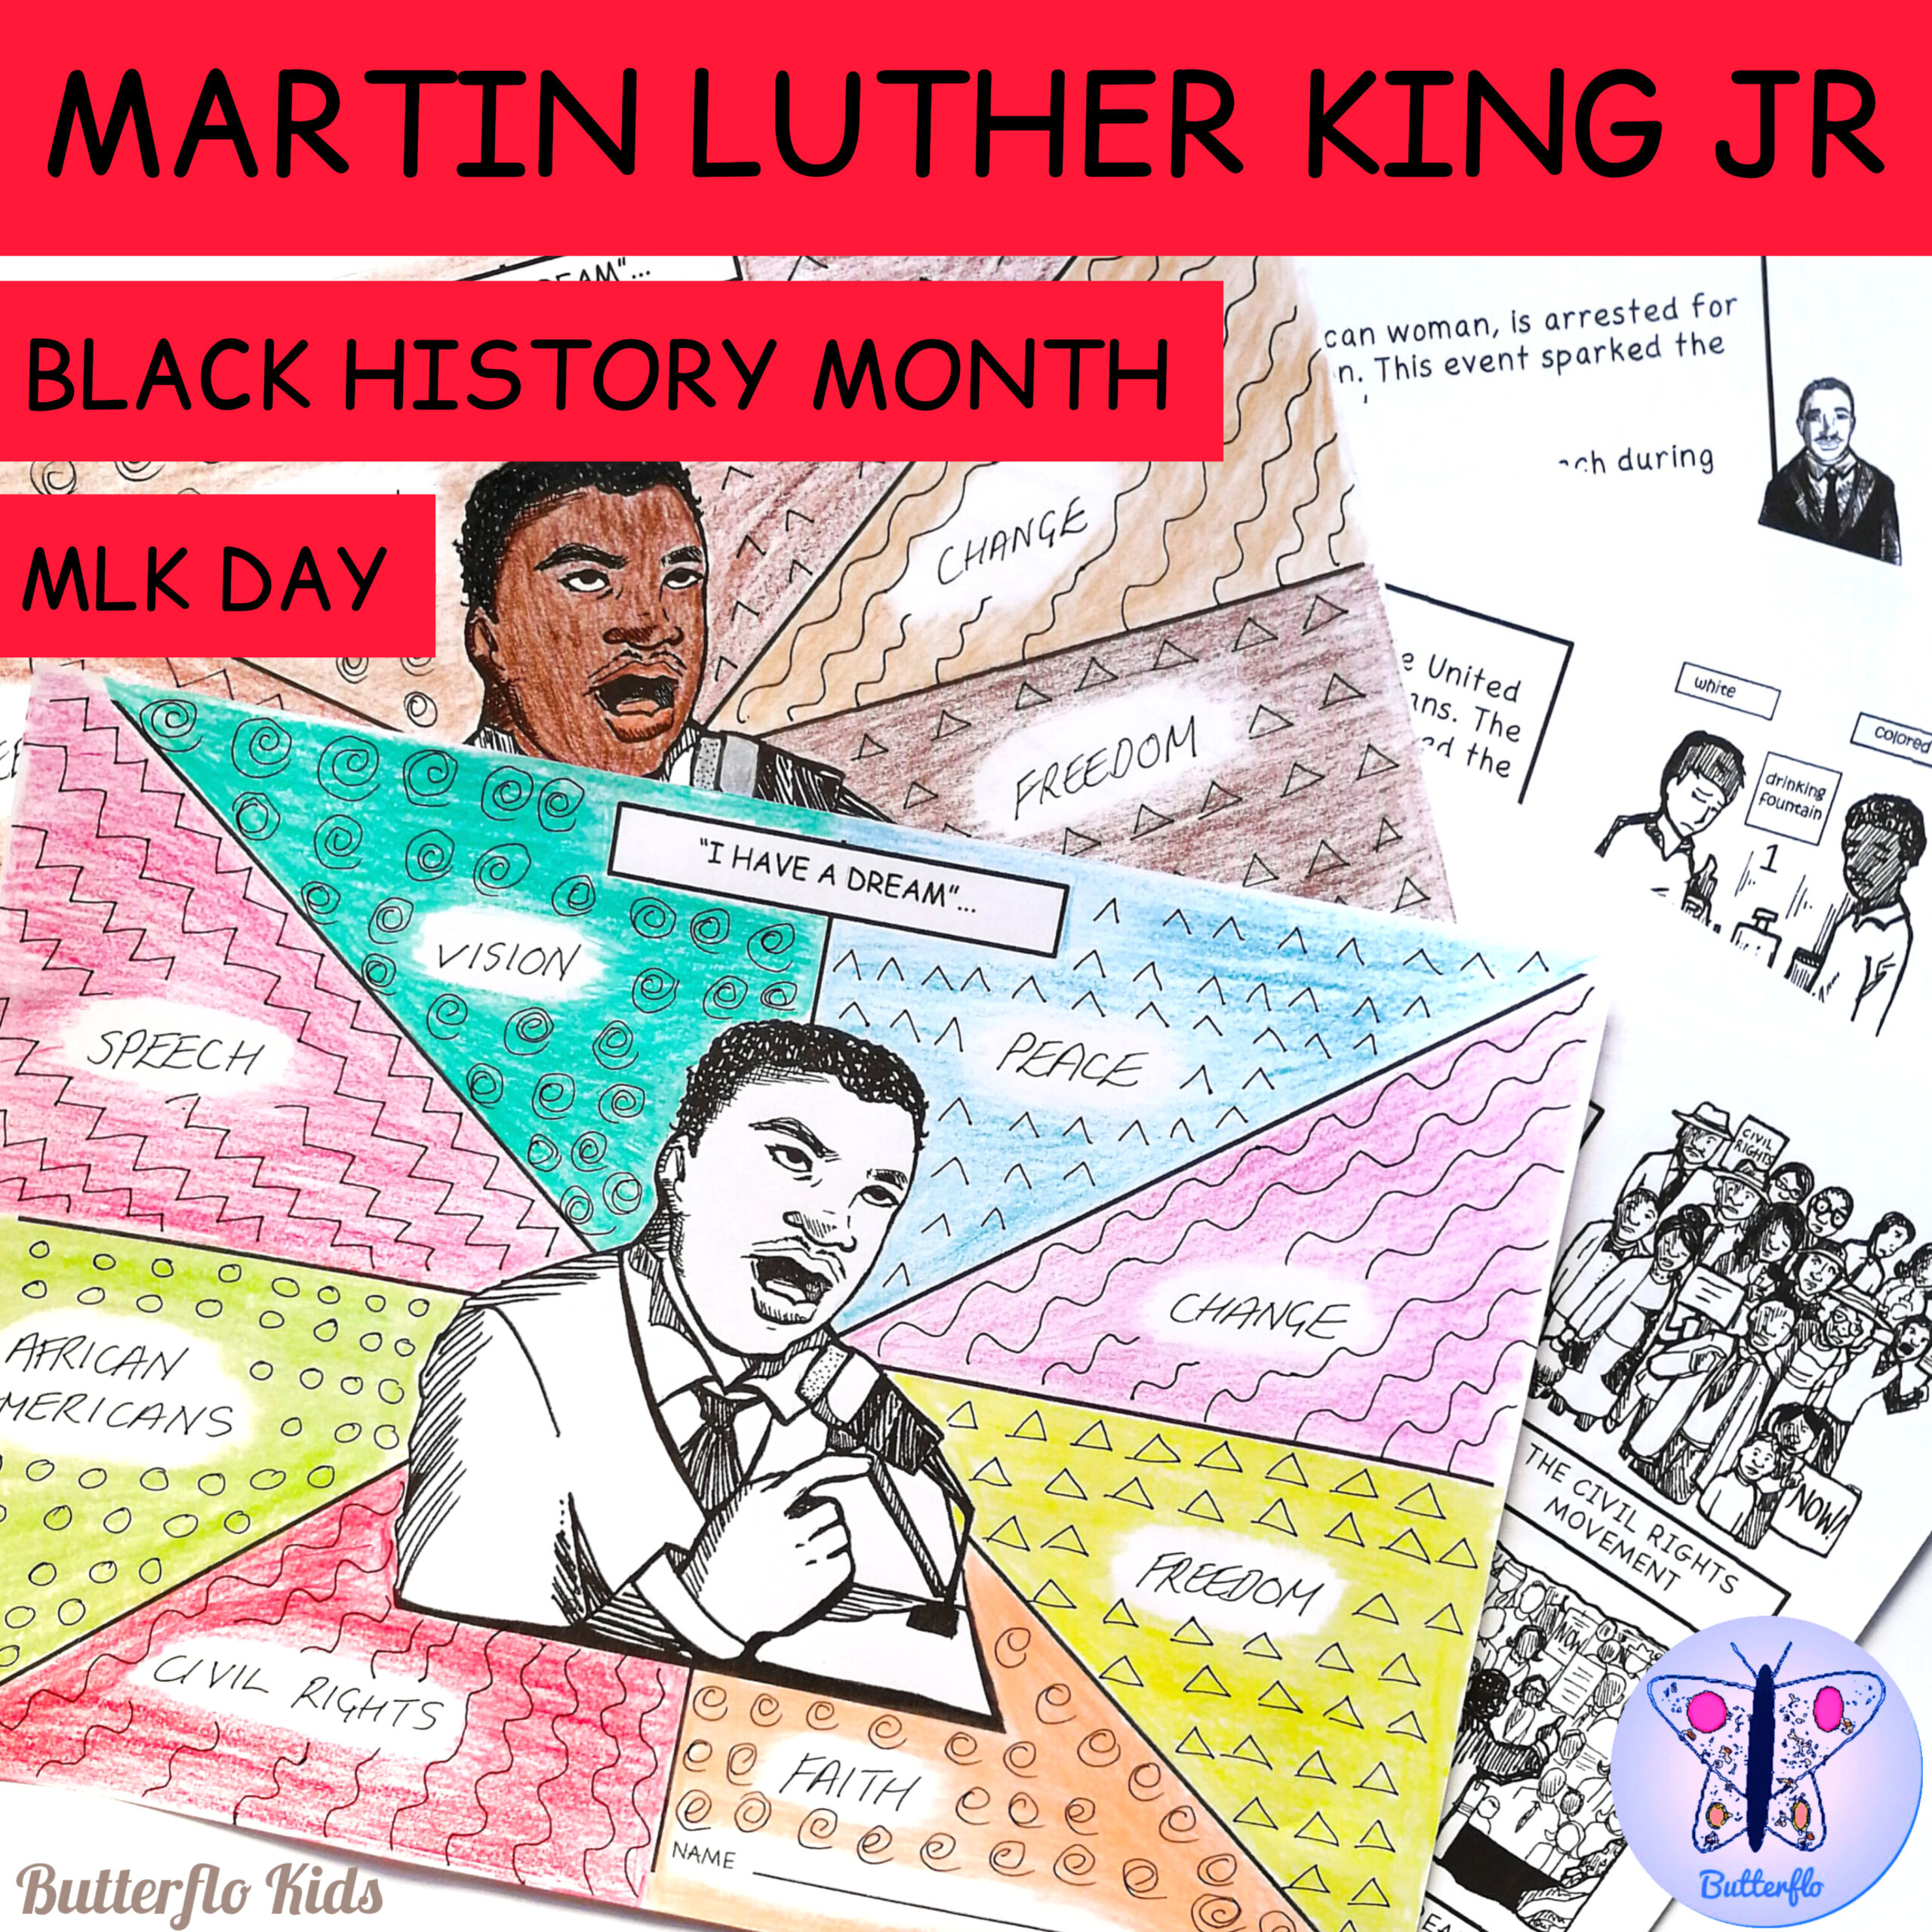 martin luther king jr black history month mlk day